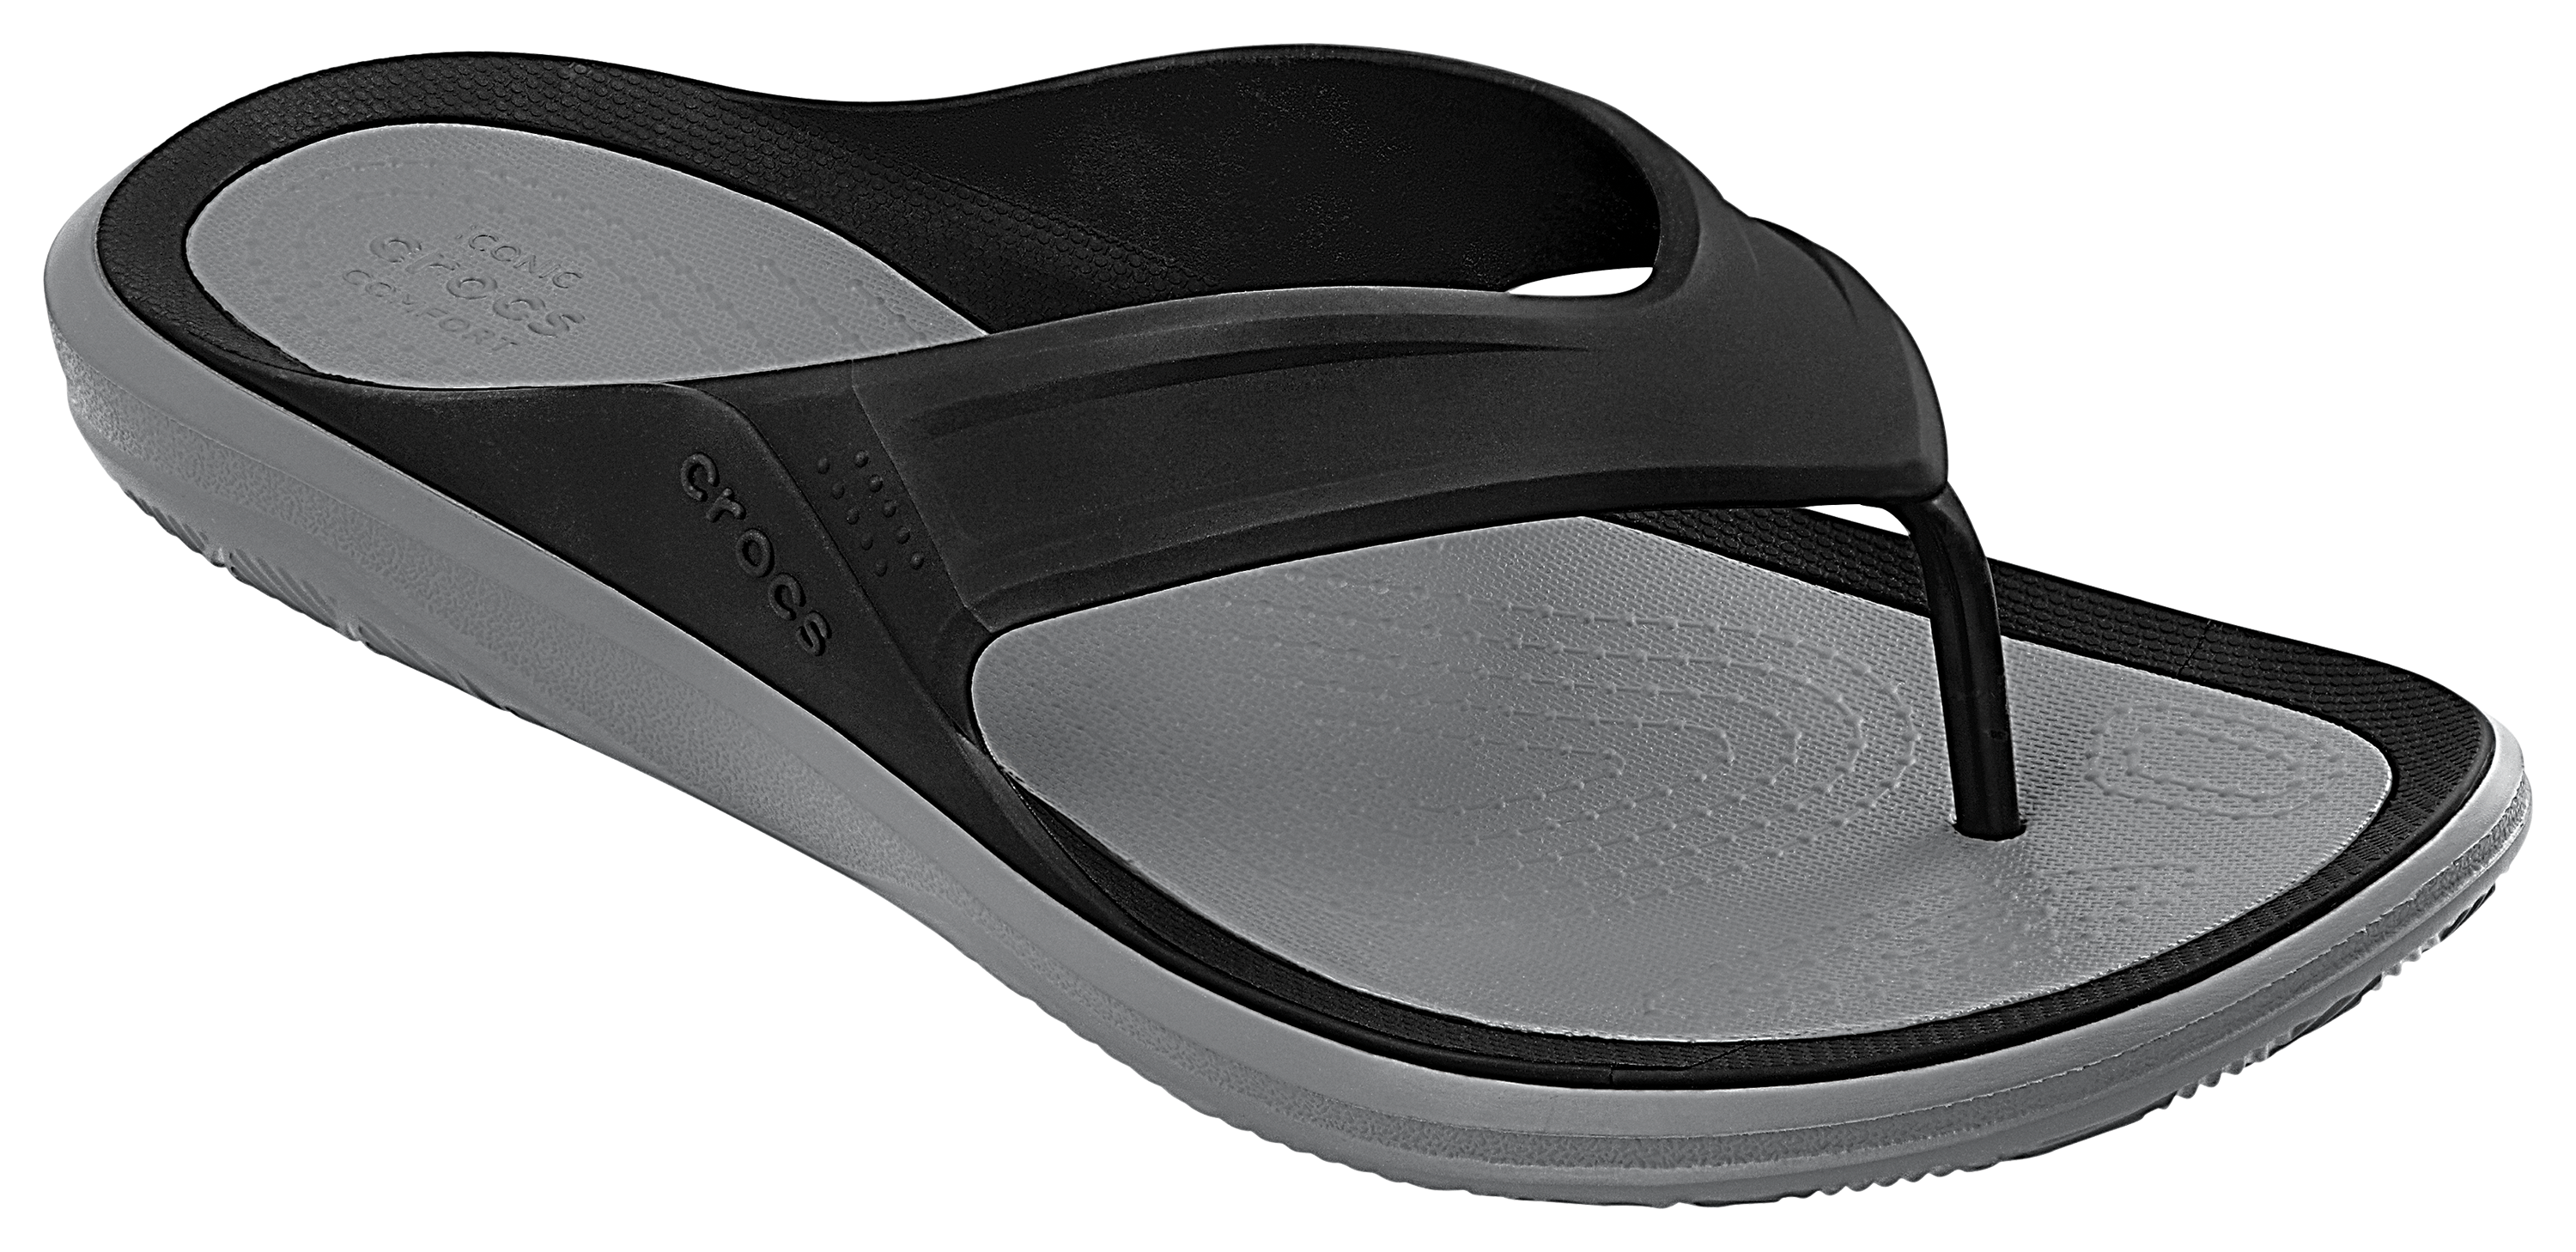 Crocs Swiftwater Wave Flip Thong Sandals for Men - Black/Gray - 11M